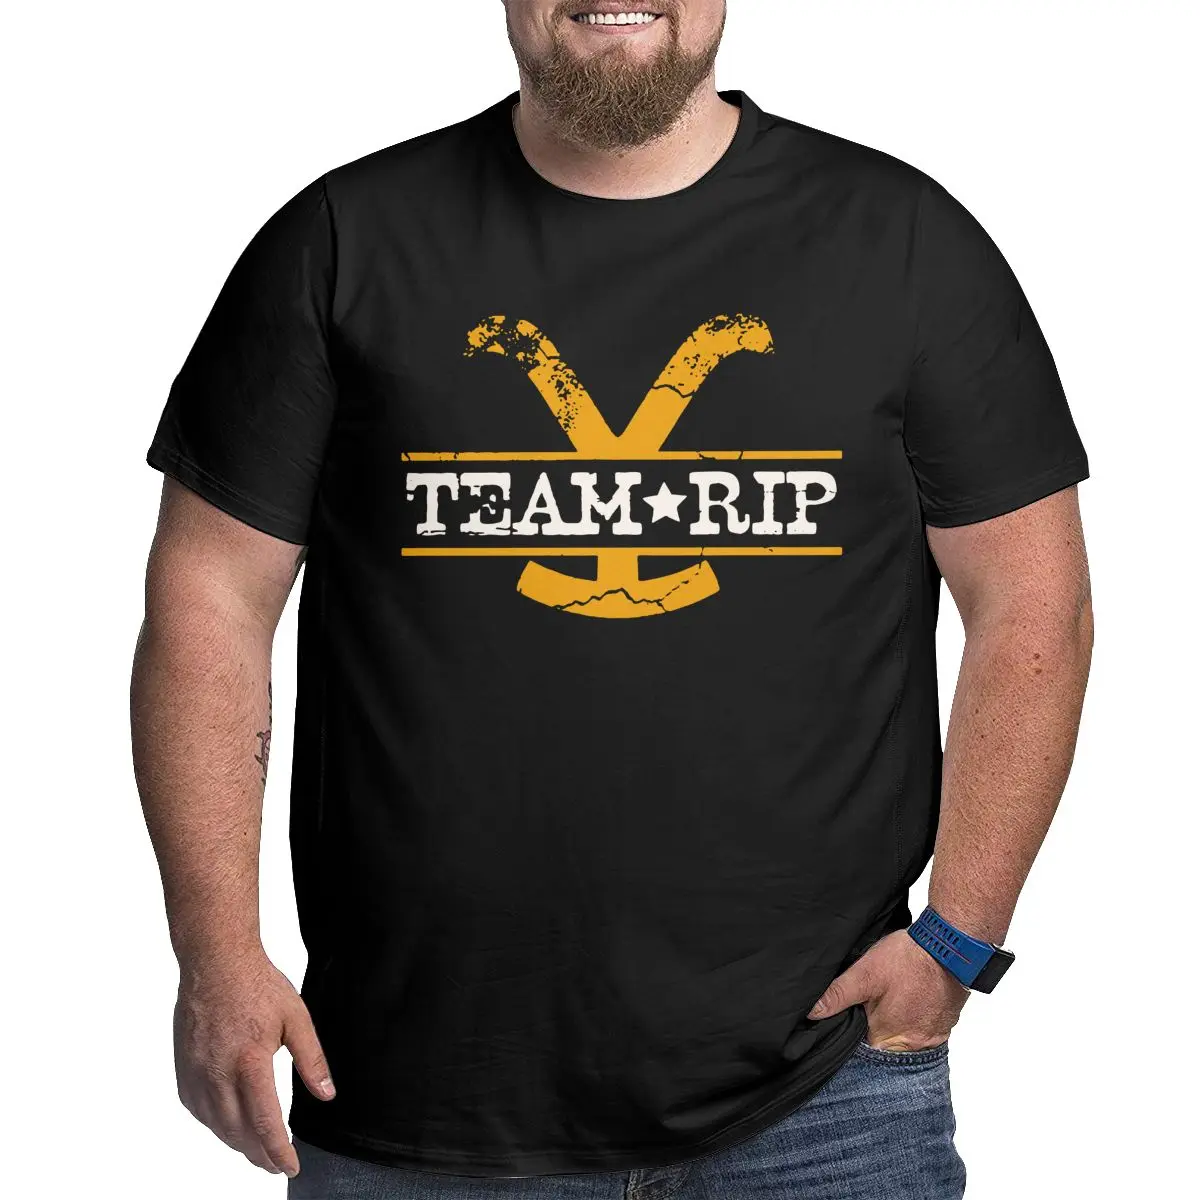 Camisetas del equipo Rip Yellowstone para hombre, camisa de manga corta de algodón puro de dutón, de gran tamaño, 4XL, 5XL, 6XL